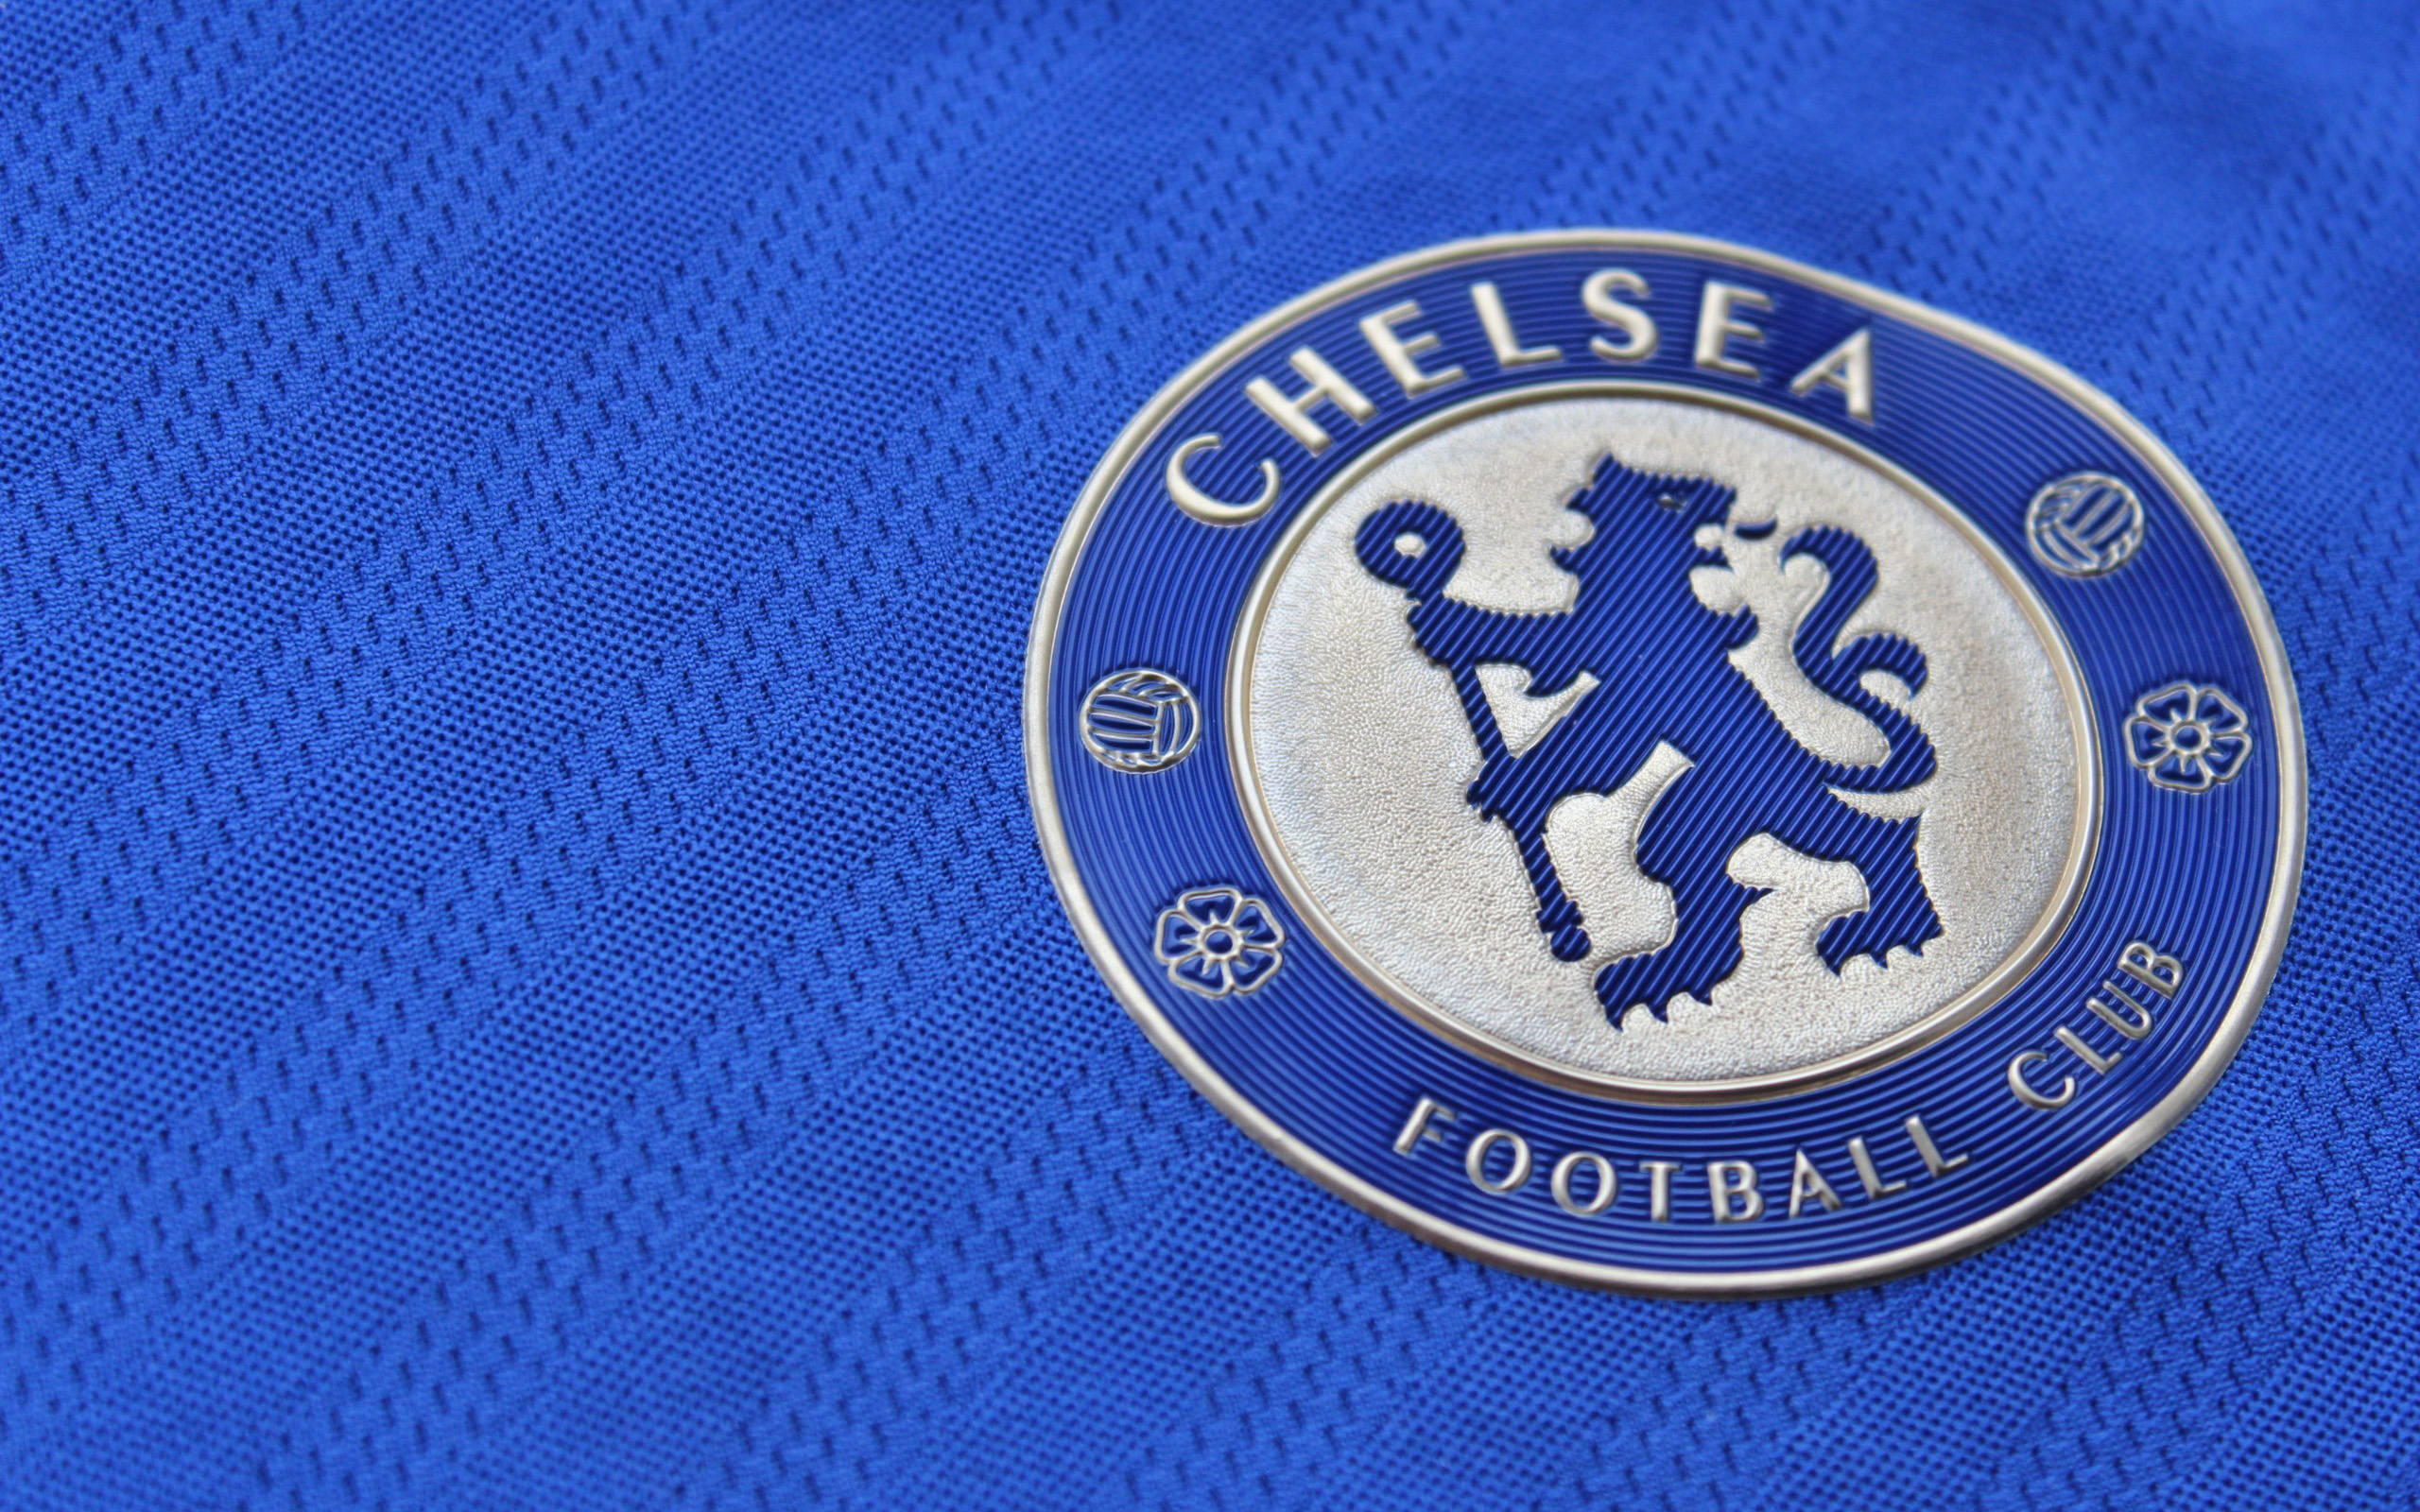 Handy-Wallpaper Sport, Fußball, Logo, Chelsea Fc kostenlos herunterladen.